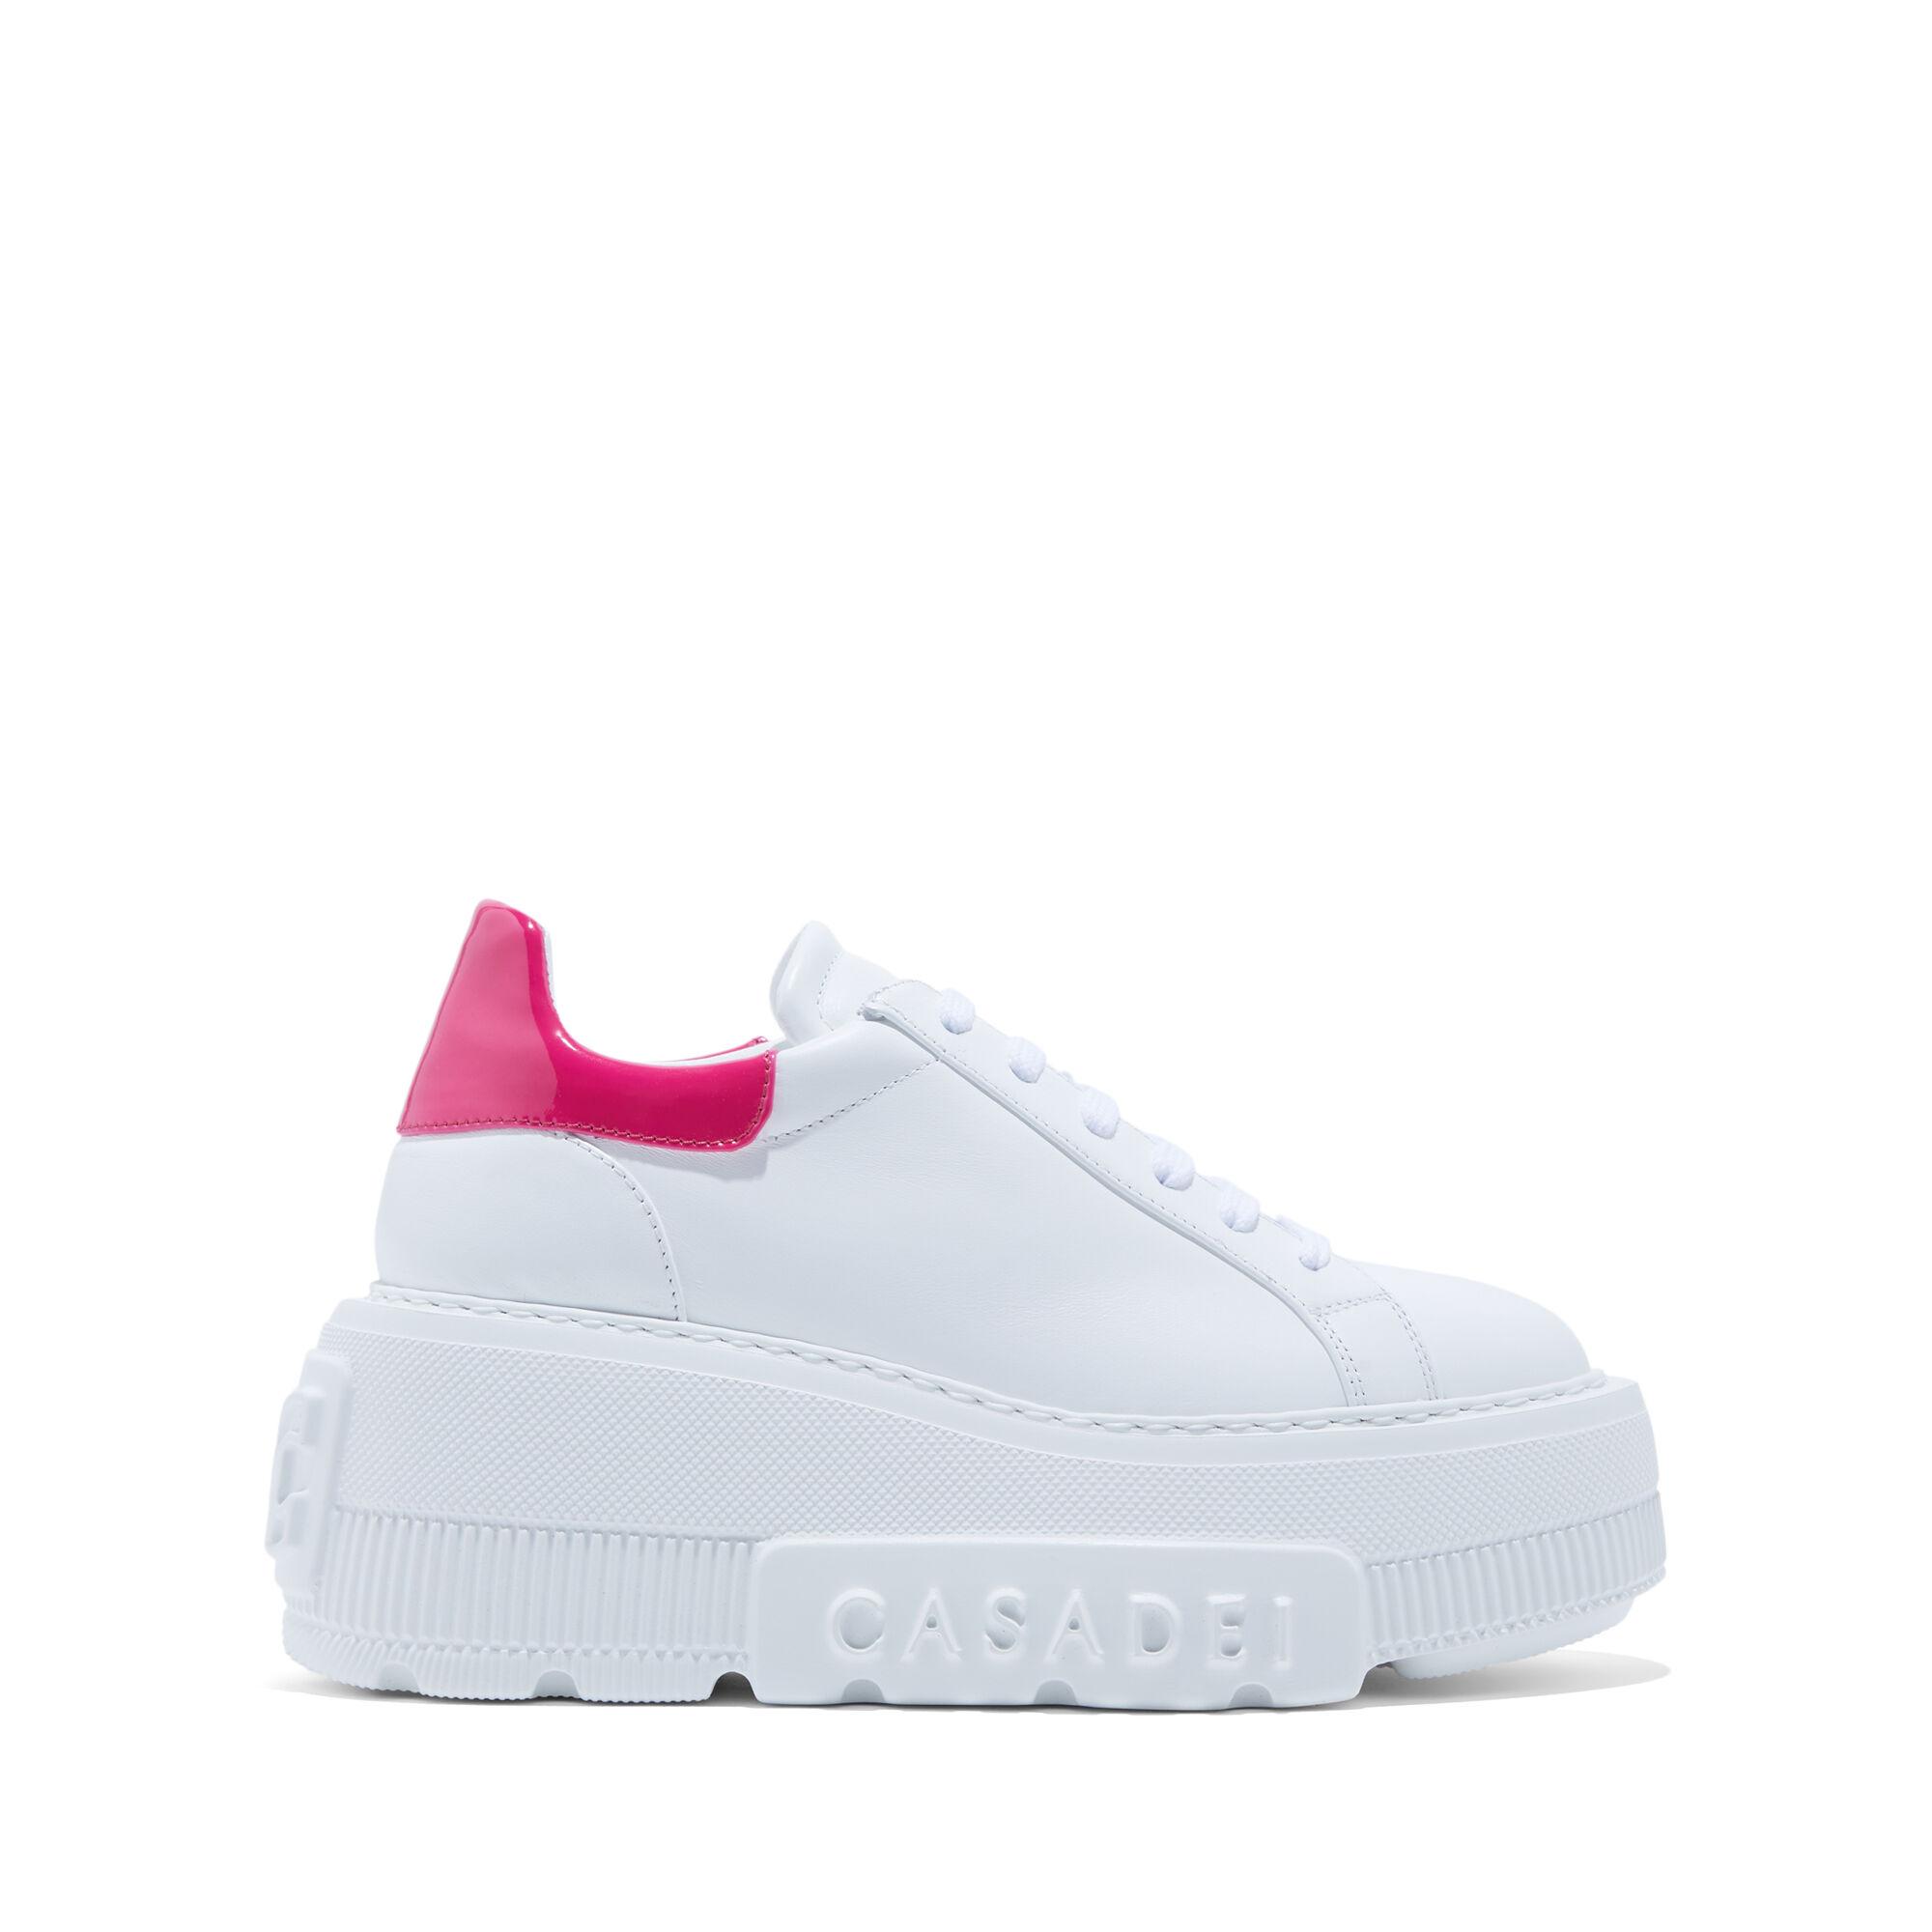 Casadei Nexus Tiffany Sneakers in White | Lyst